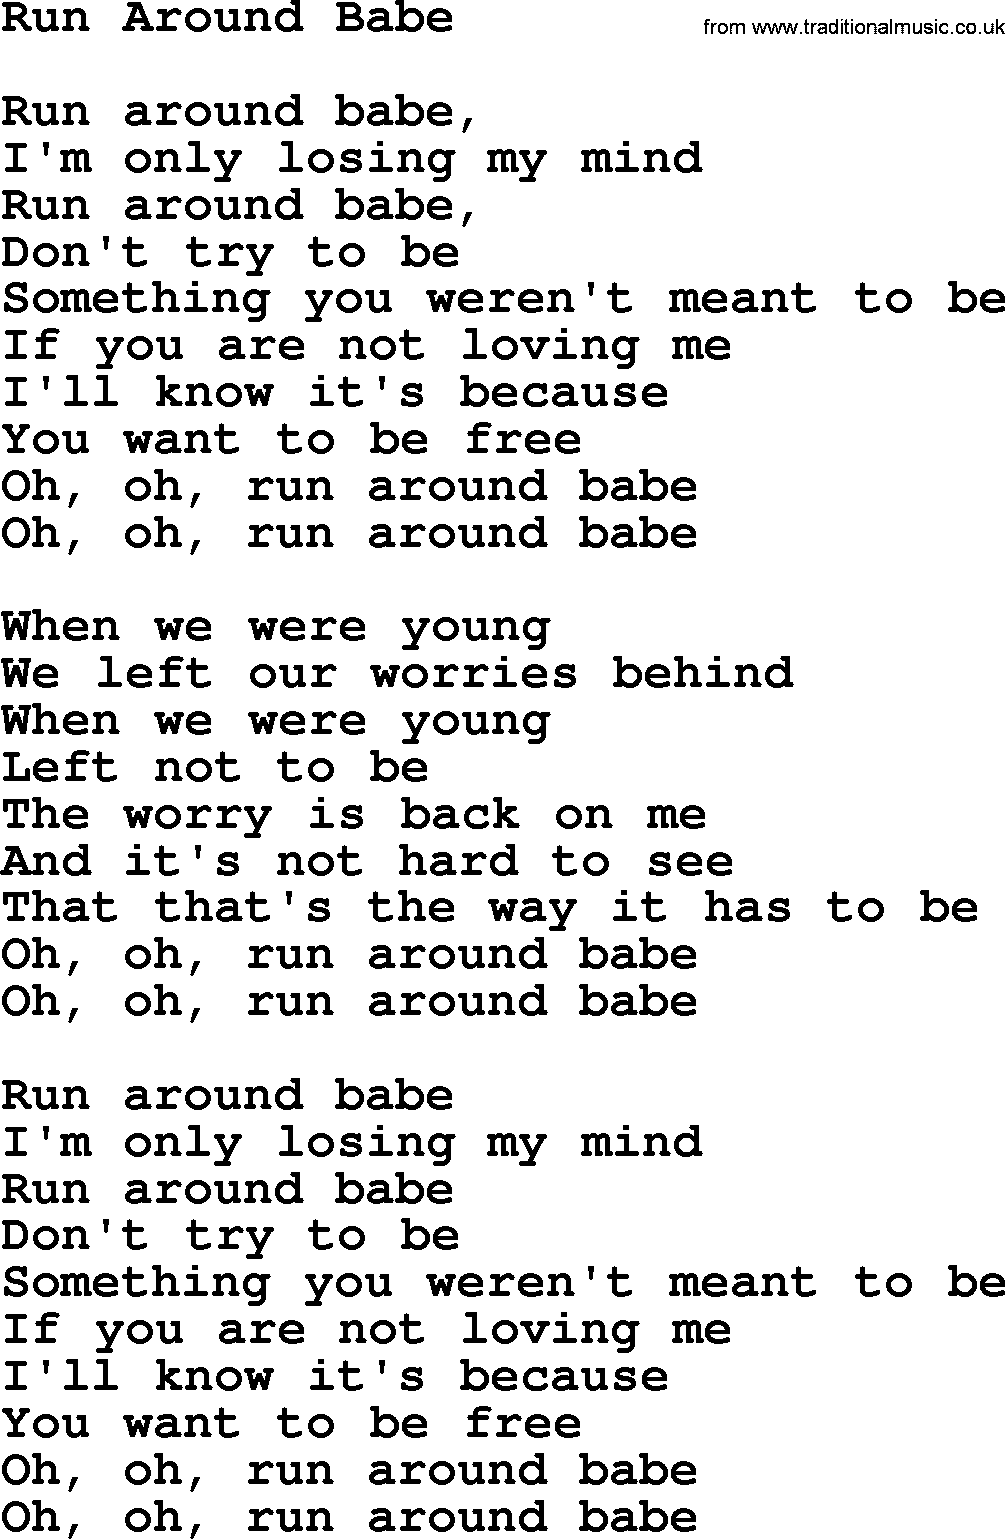 The Byrds song Run Around Babe, lyrics